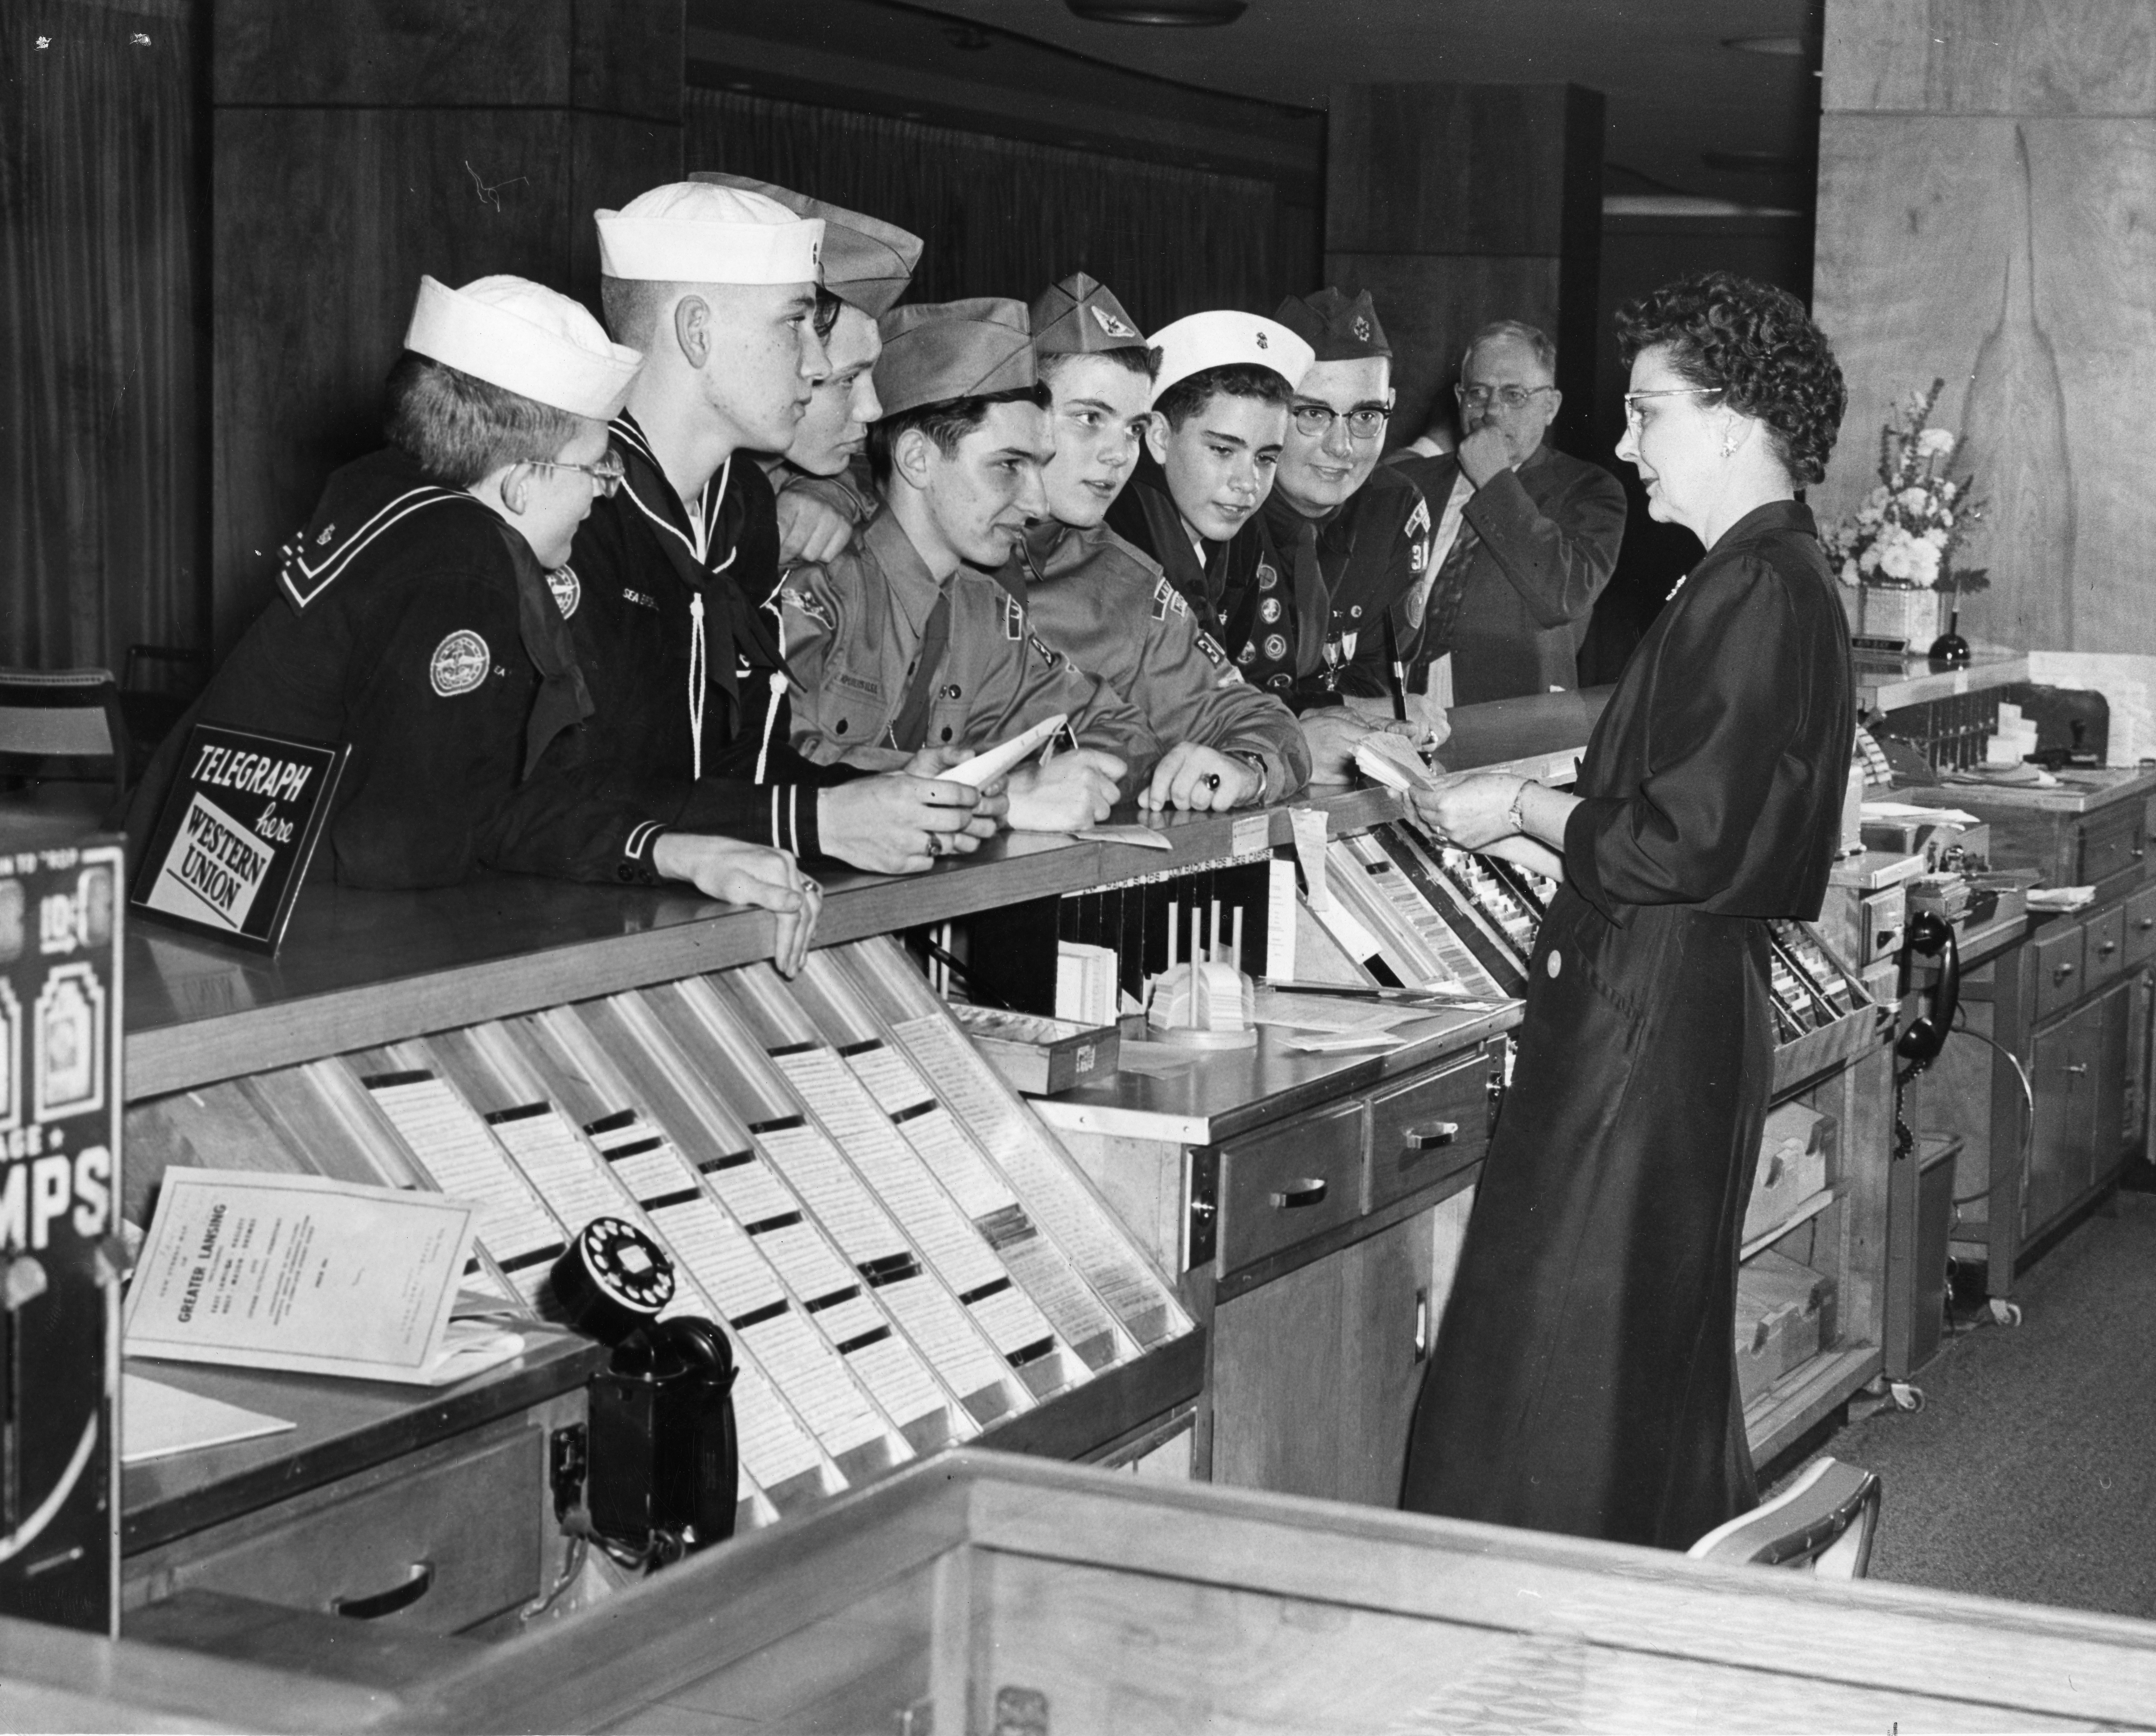 Servicemen at the Kellogg Center registration desk, 1957